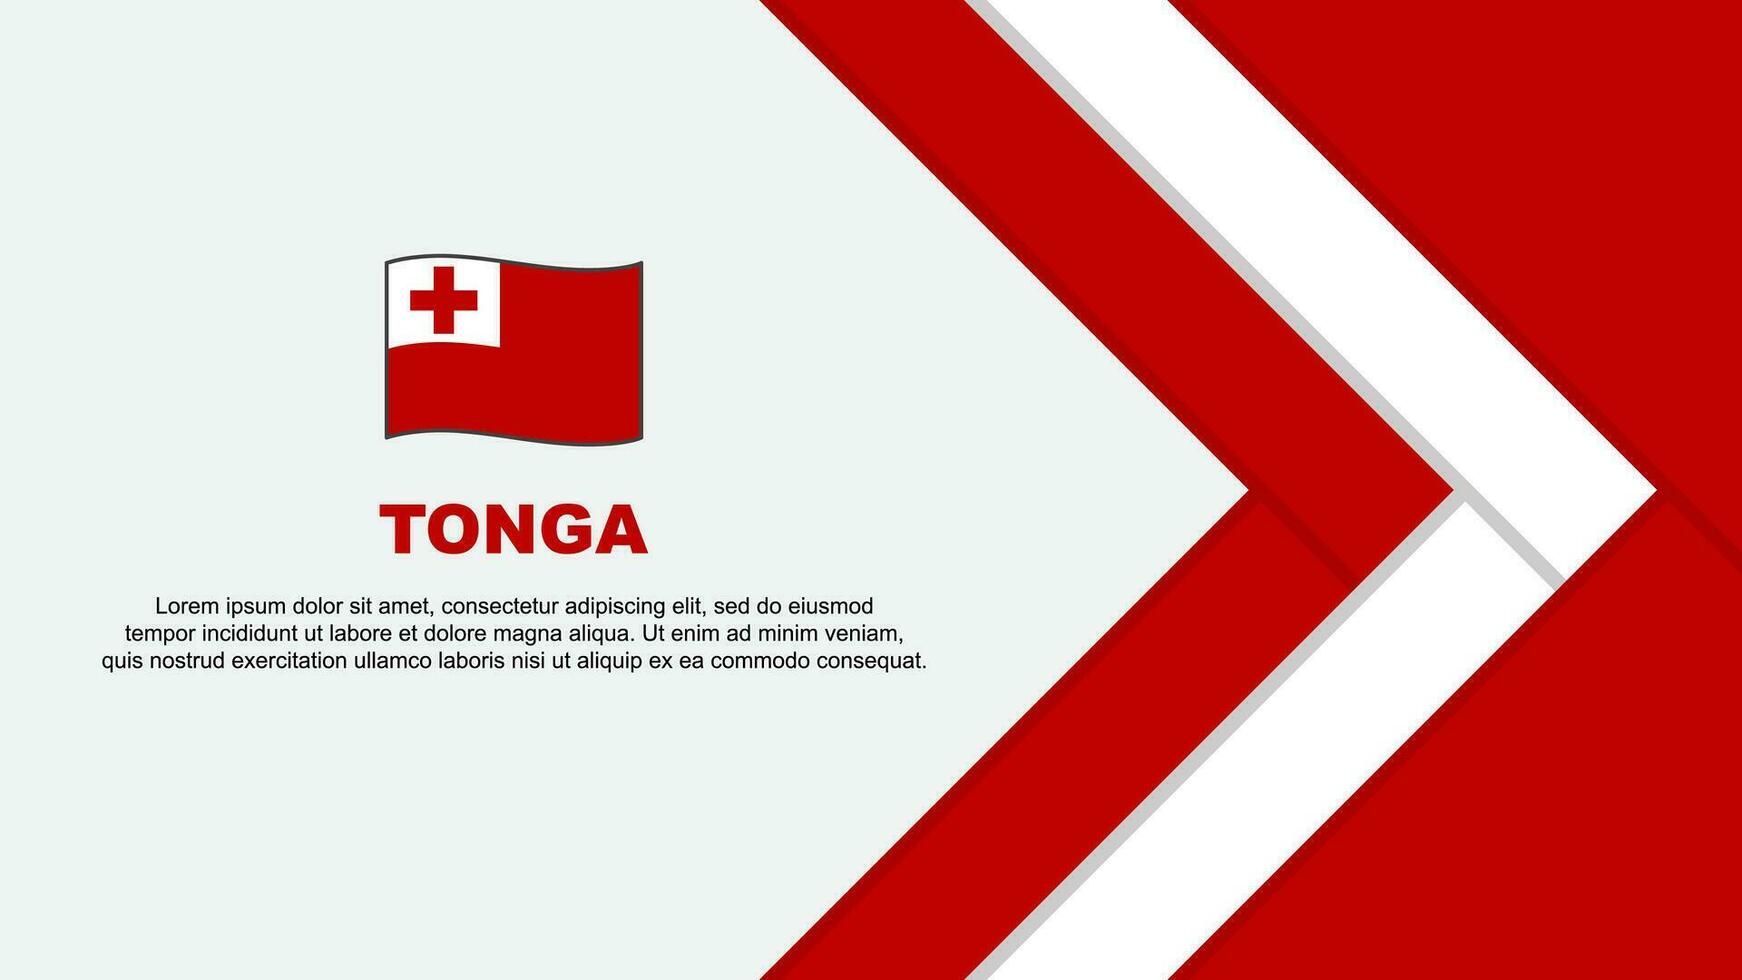 Tonga Flag Abstract Background Design Template. Tonga Independence Day Banner Cartoon Vector Illustration. Tonga Cartoon